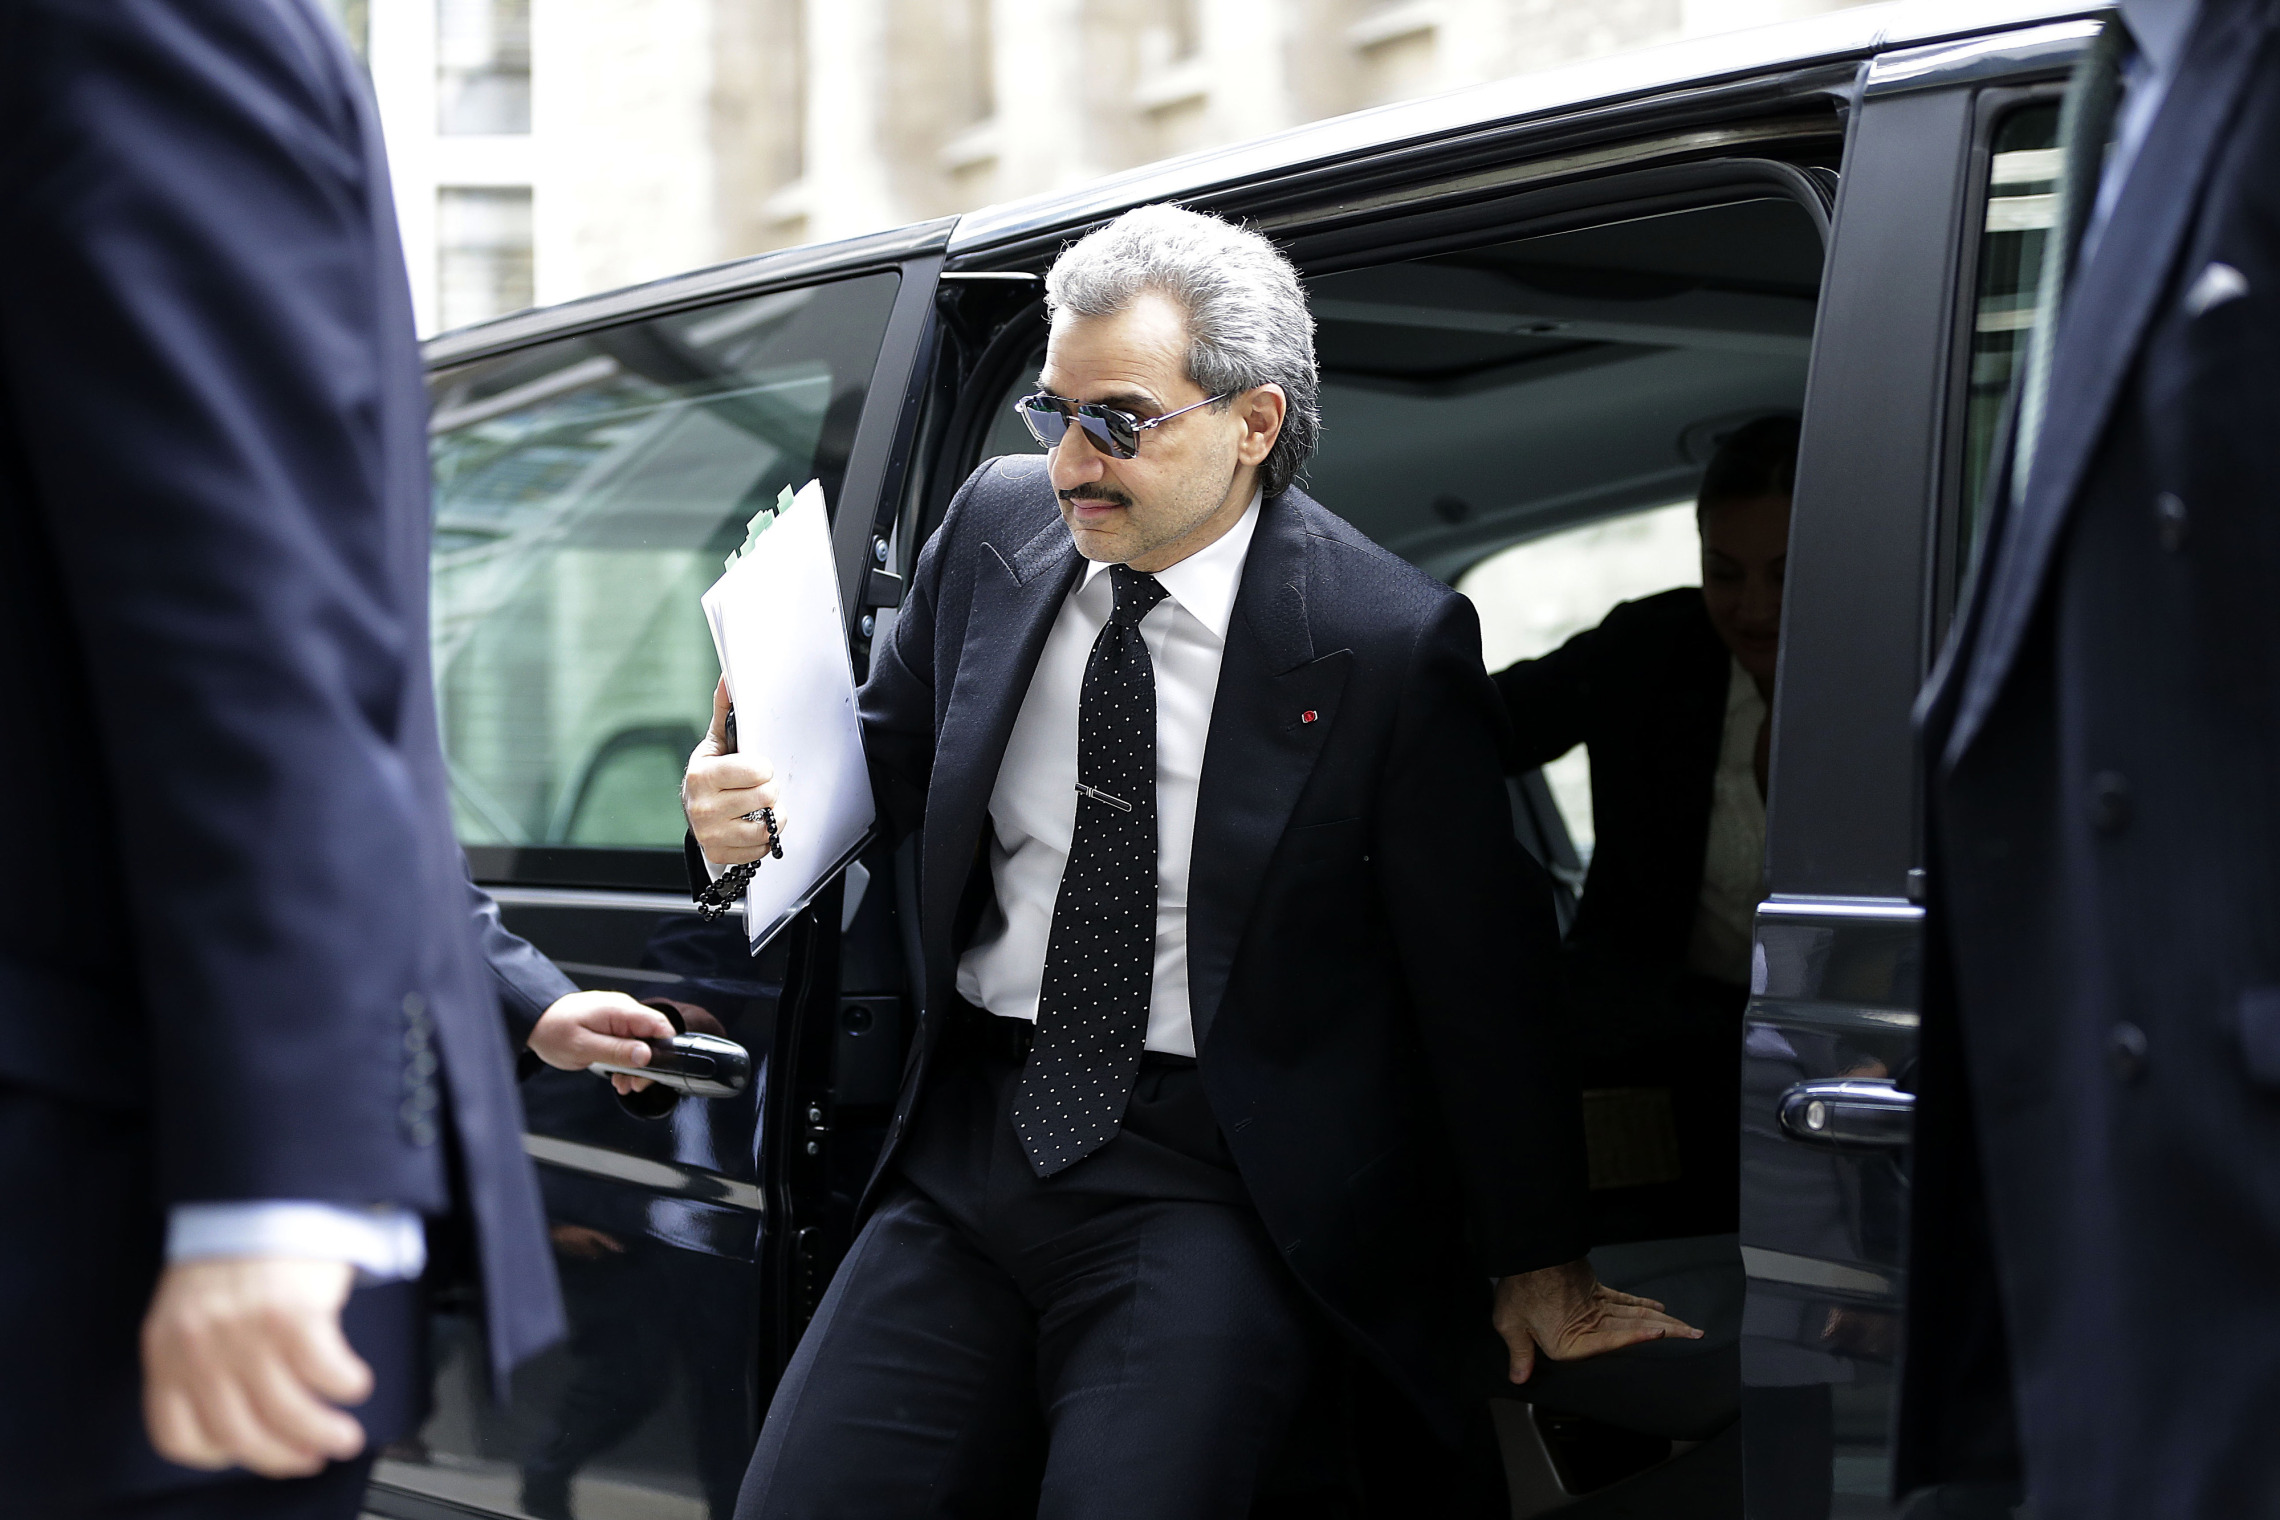 Pursuing Saudi Prince Alwaleed Bin Talal At London's High Court